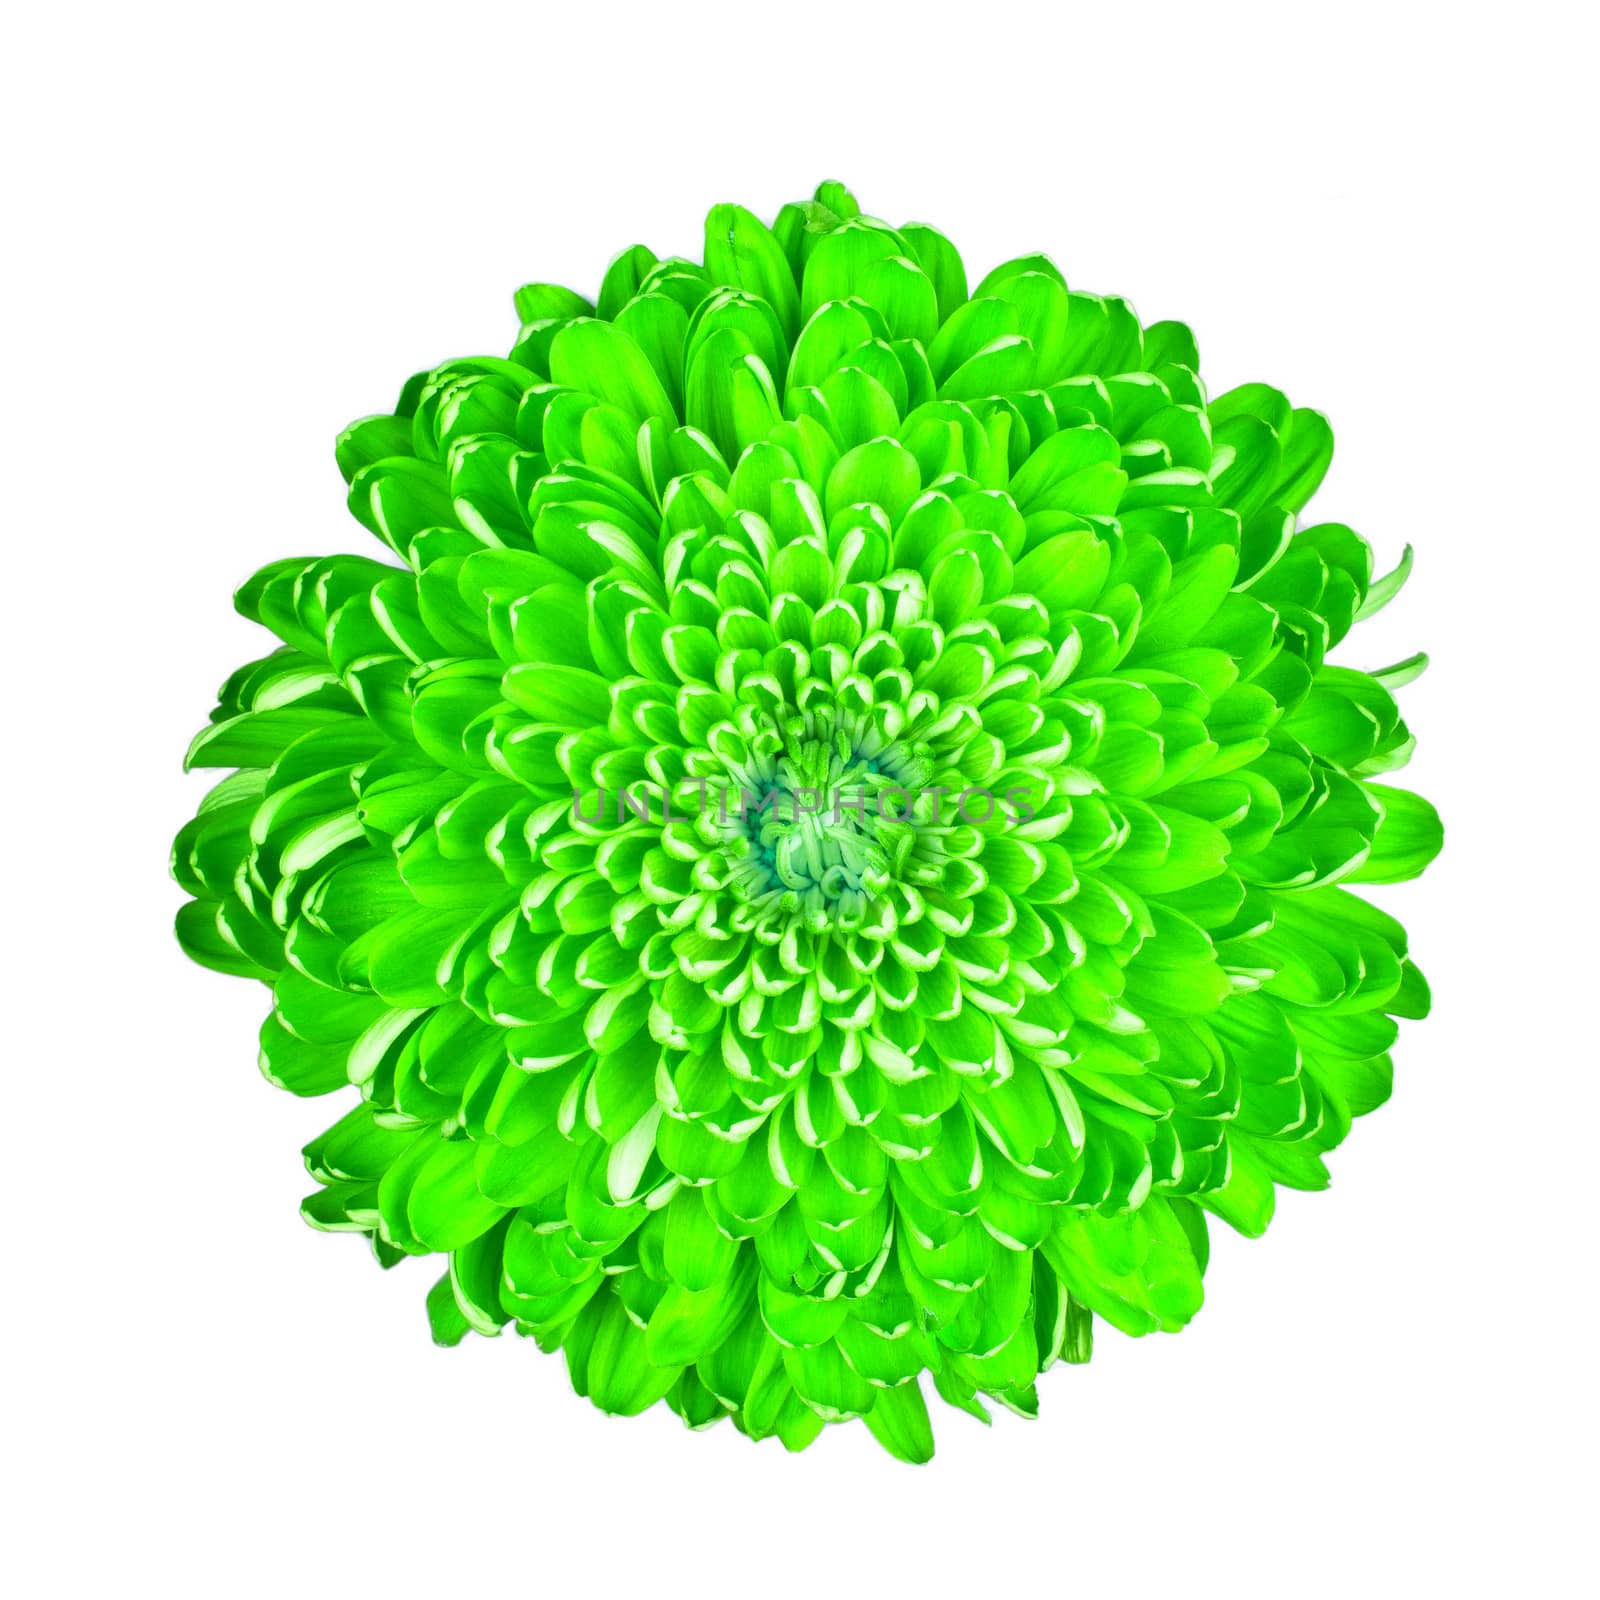 Green chrysanthemum by michaklootwijk